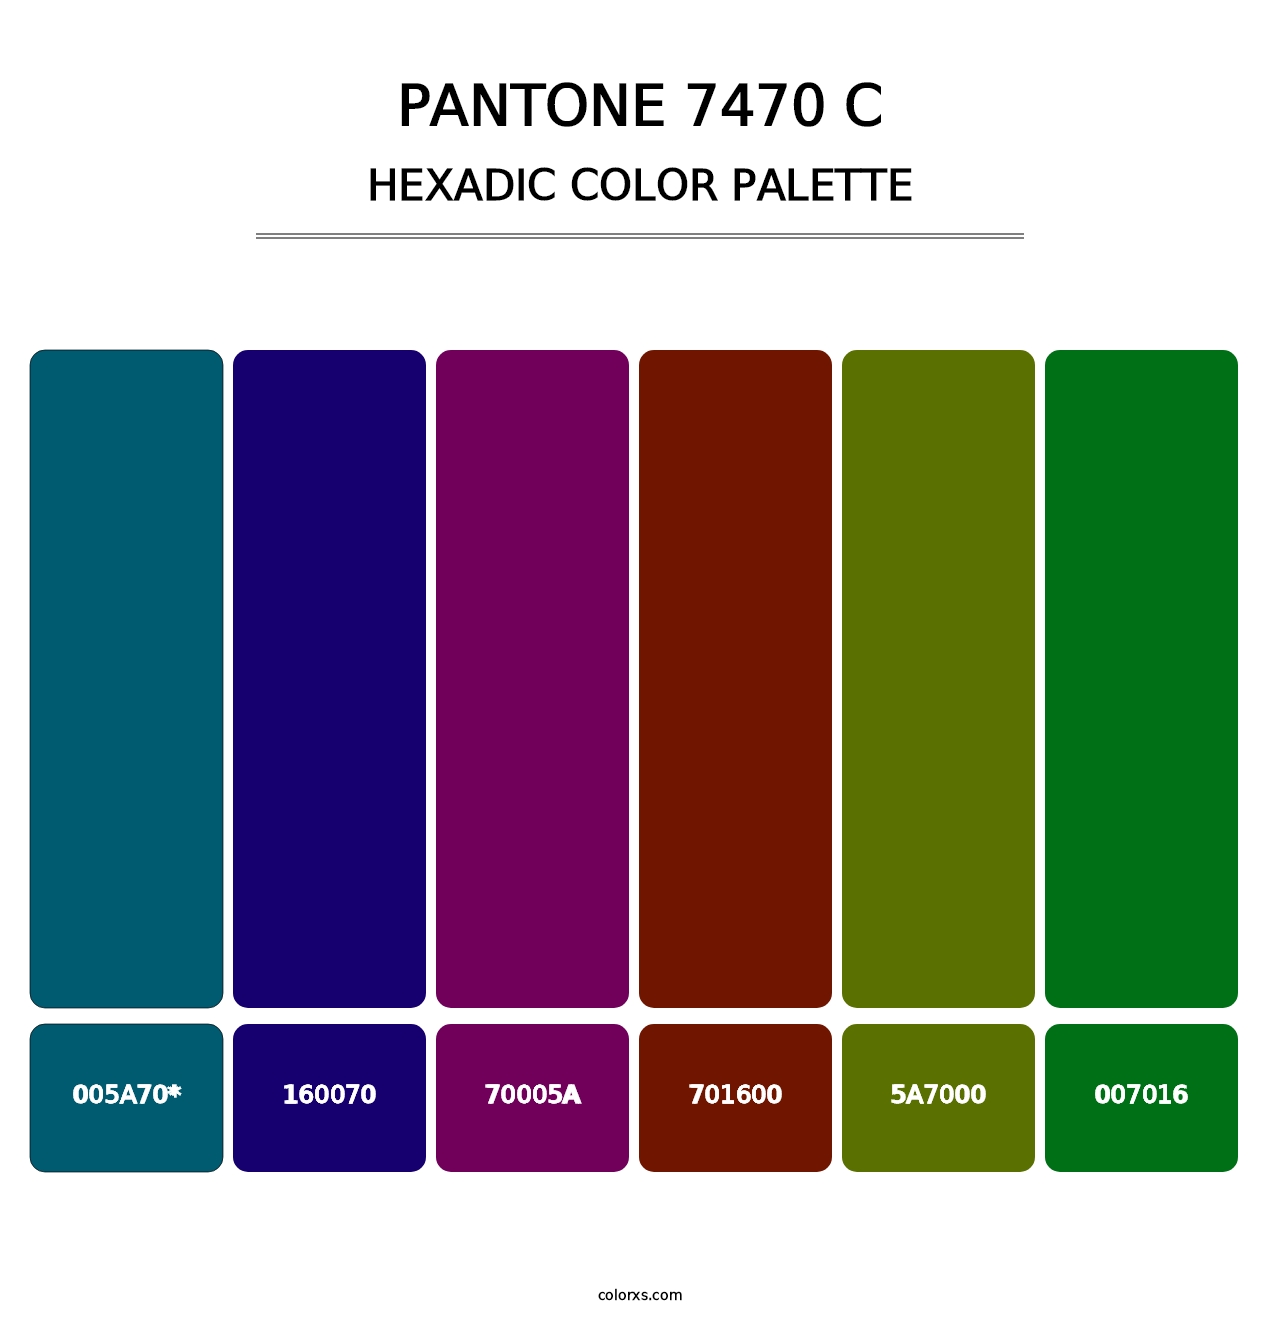 PANTONE 7470 C - Hexadic Color Palette